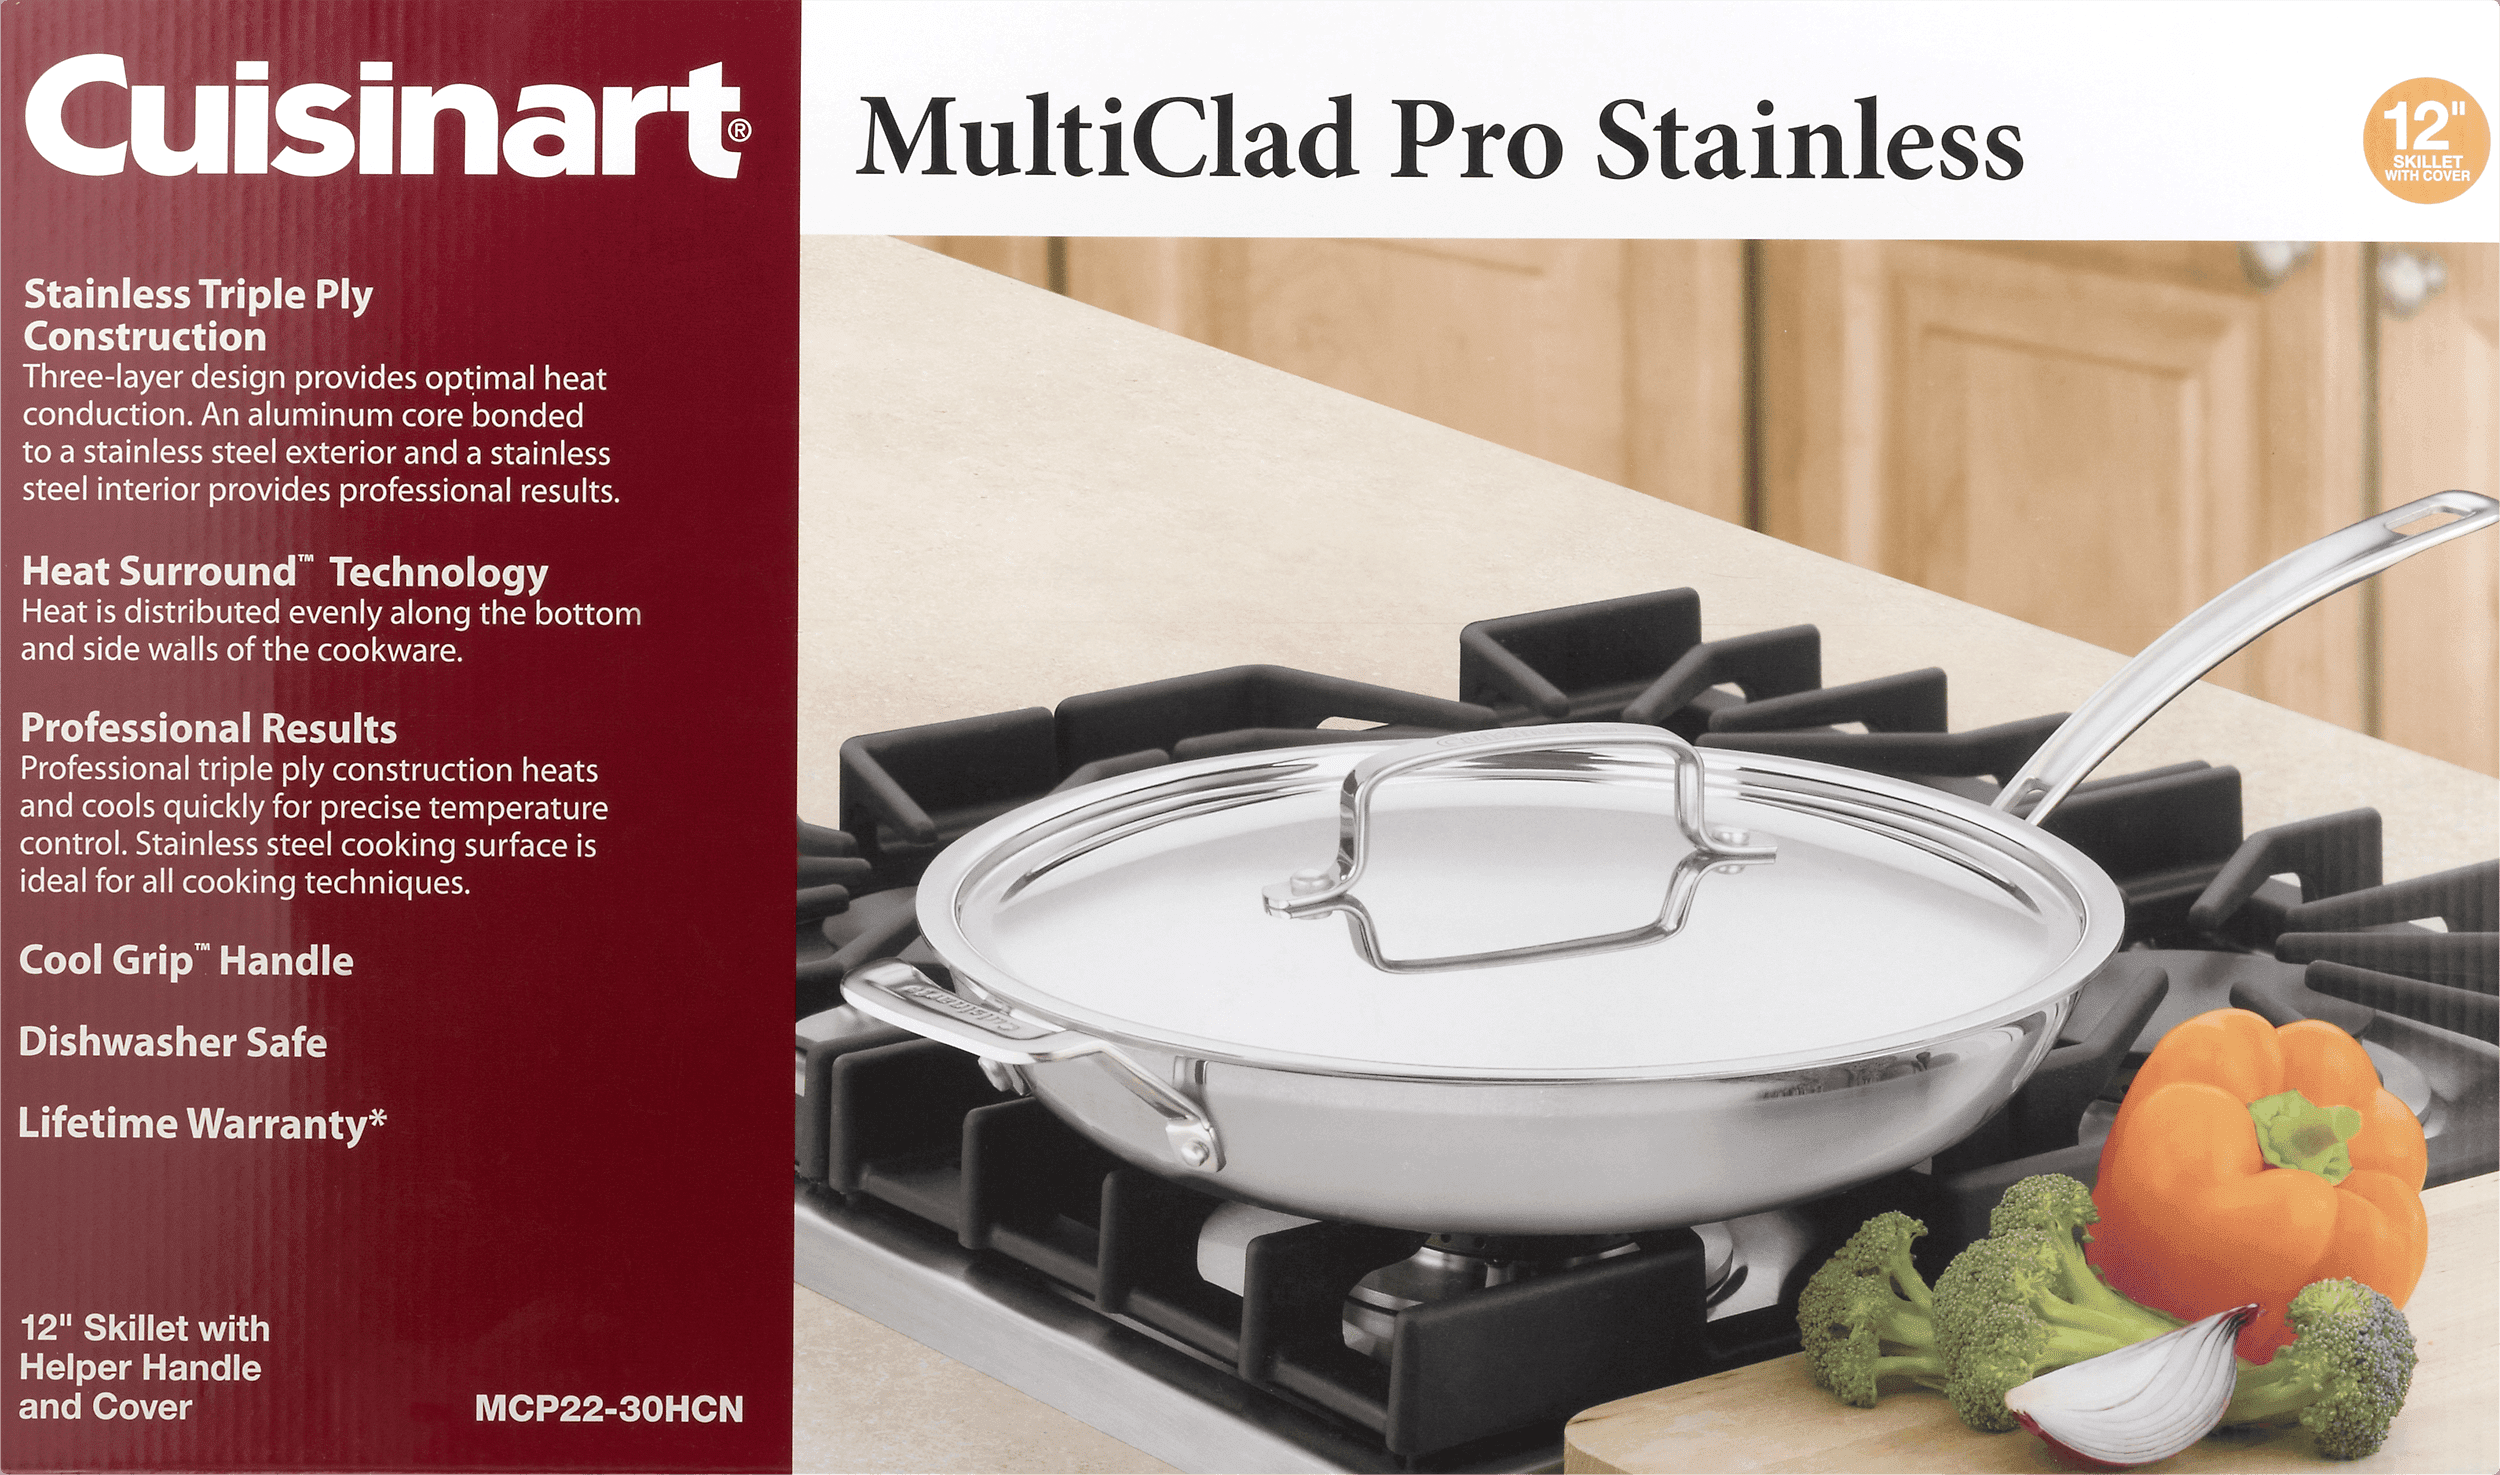 Cuisinart MultiClad Pro Stainless Steel Open Skillet with Helper Handle